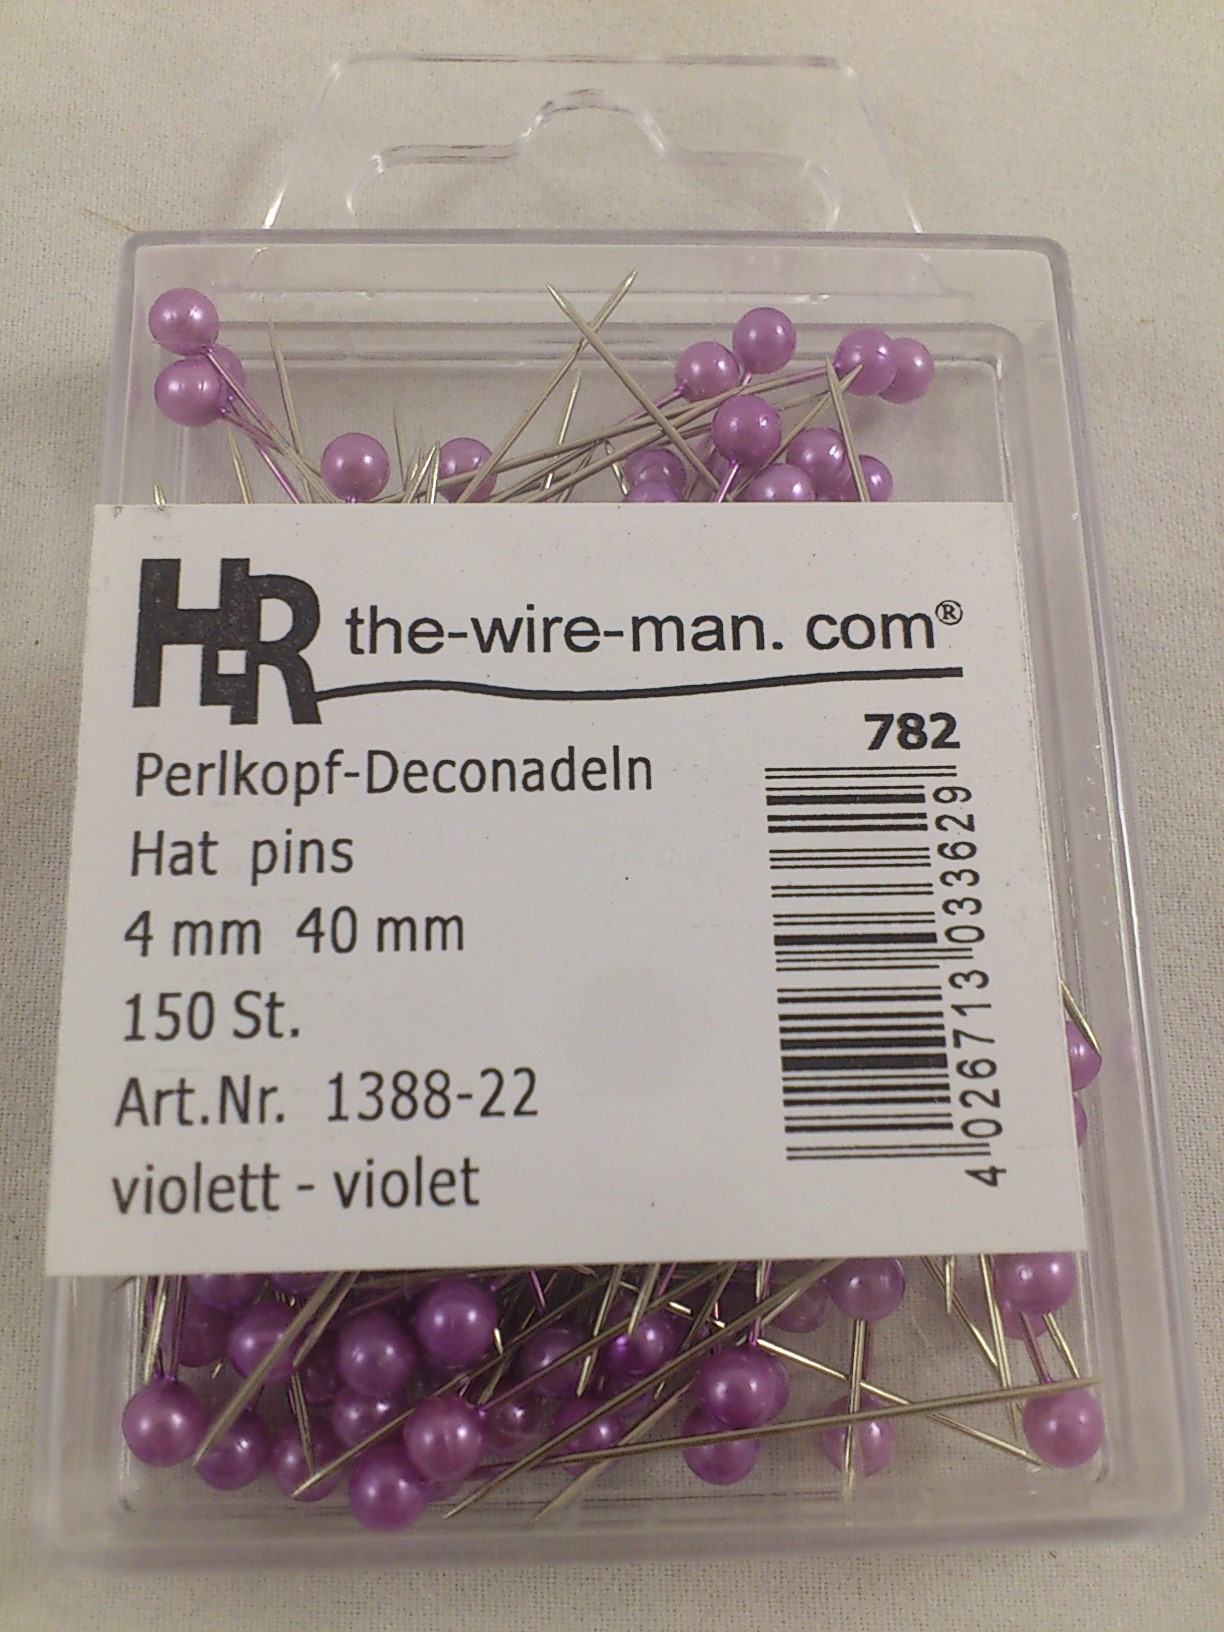 Farbigen Pins 4 mm 150 st. violett